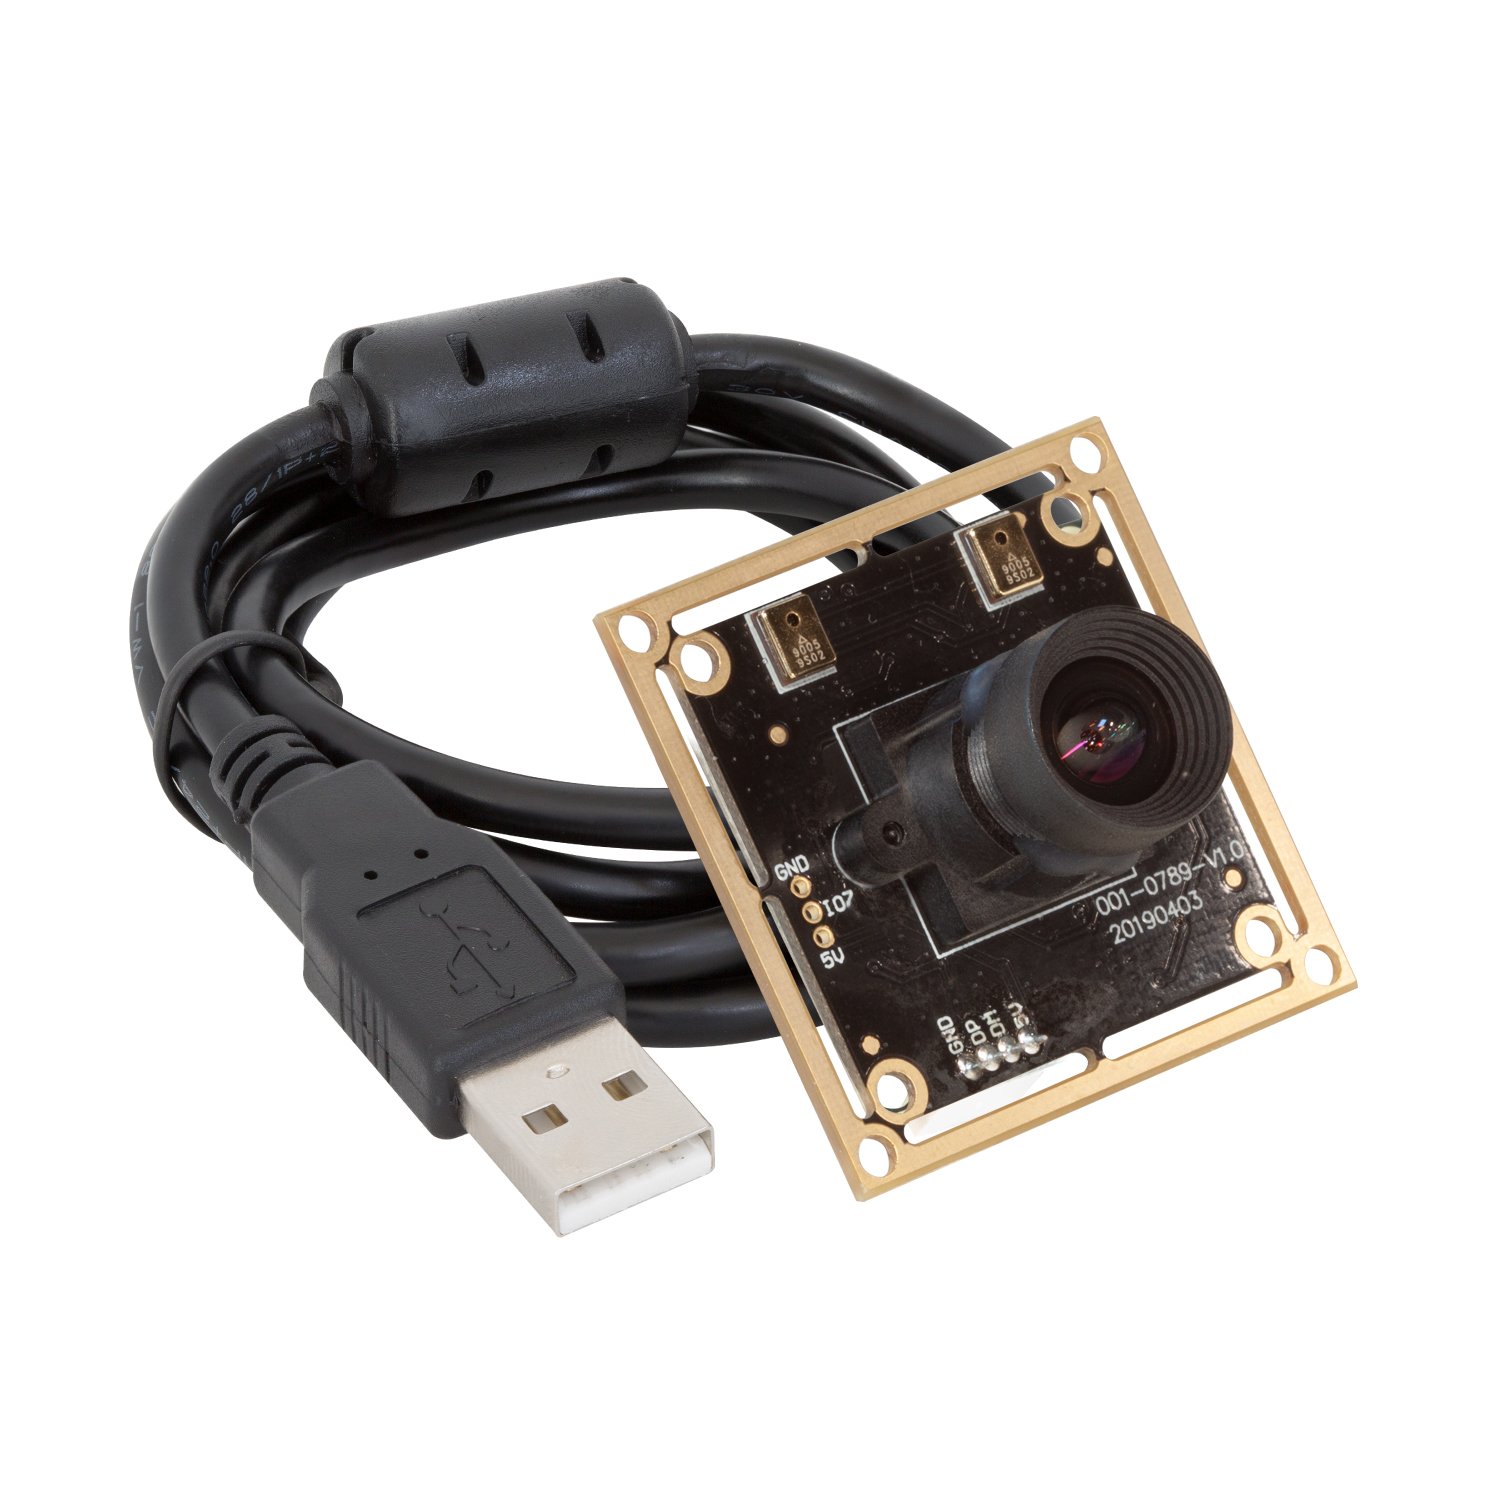 Details about   HBV-1802R 5 Million Pixel Camera Module Avec Free Pilote 5MP Uvc USB Camera 